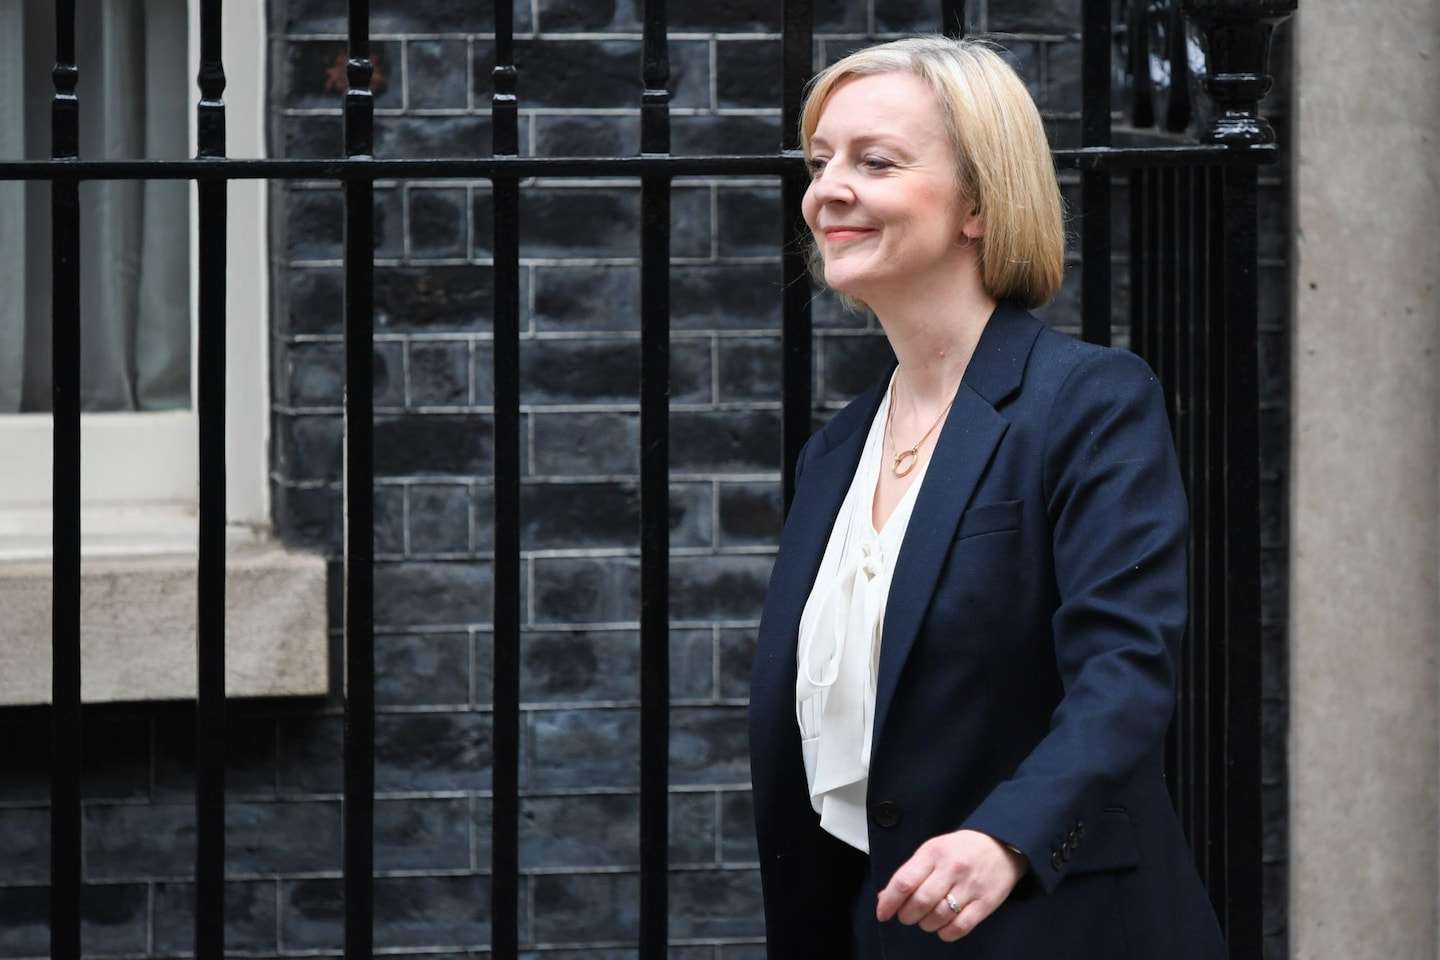 To boot Liz Truss, U.K. Conservatives face short list of poor options